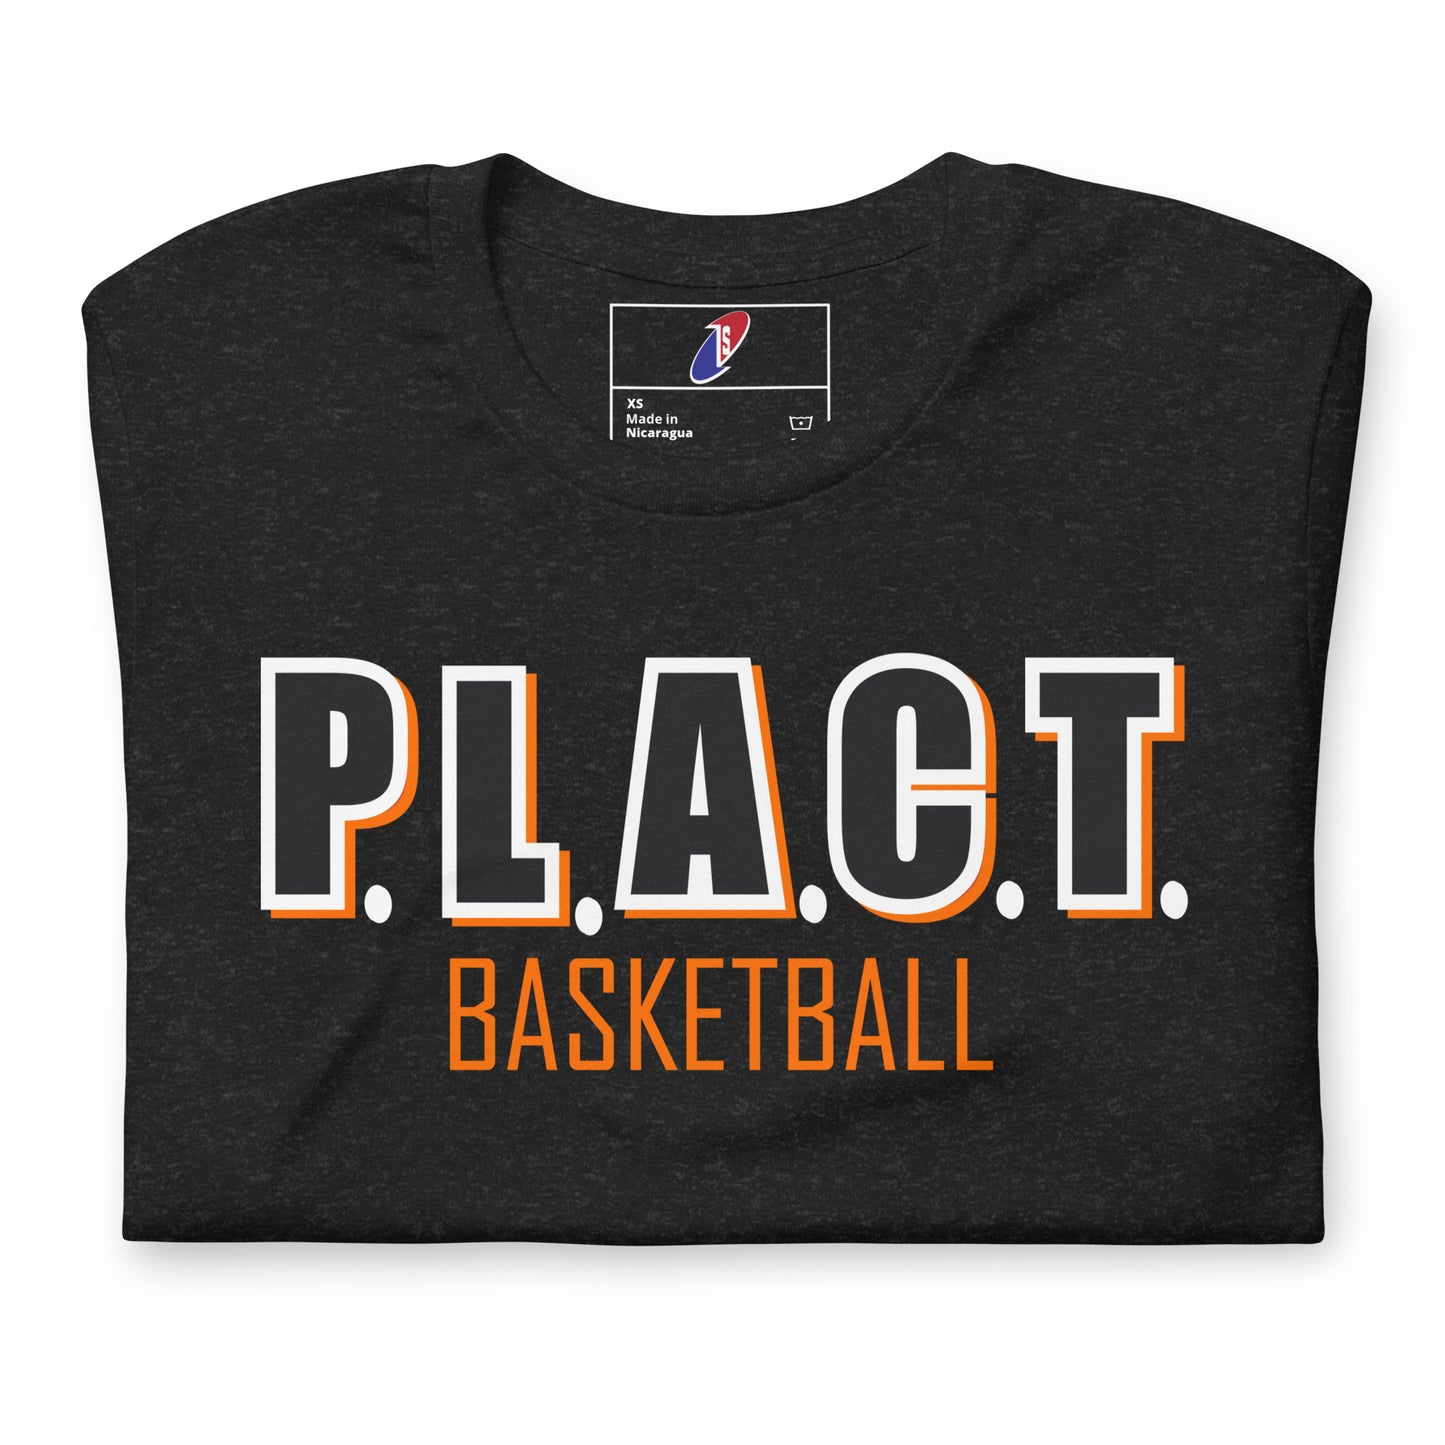 PLACT Men's T-Shirt